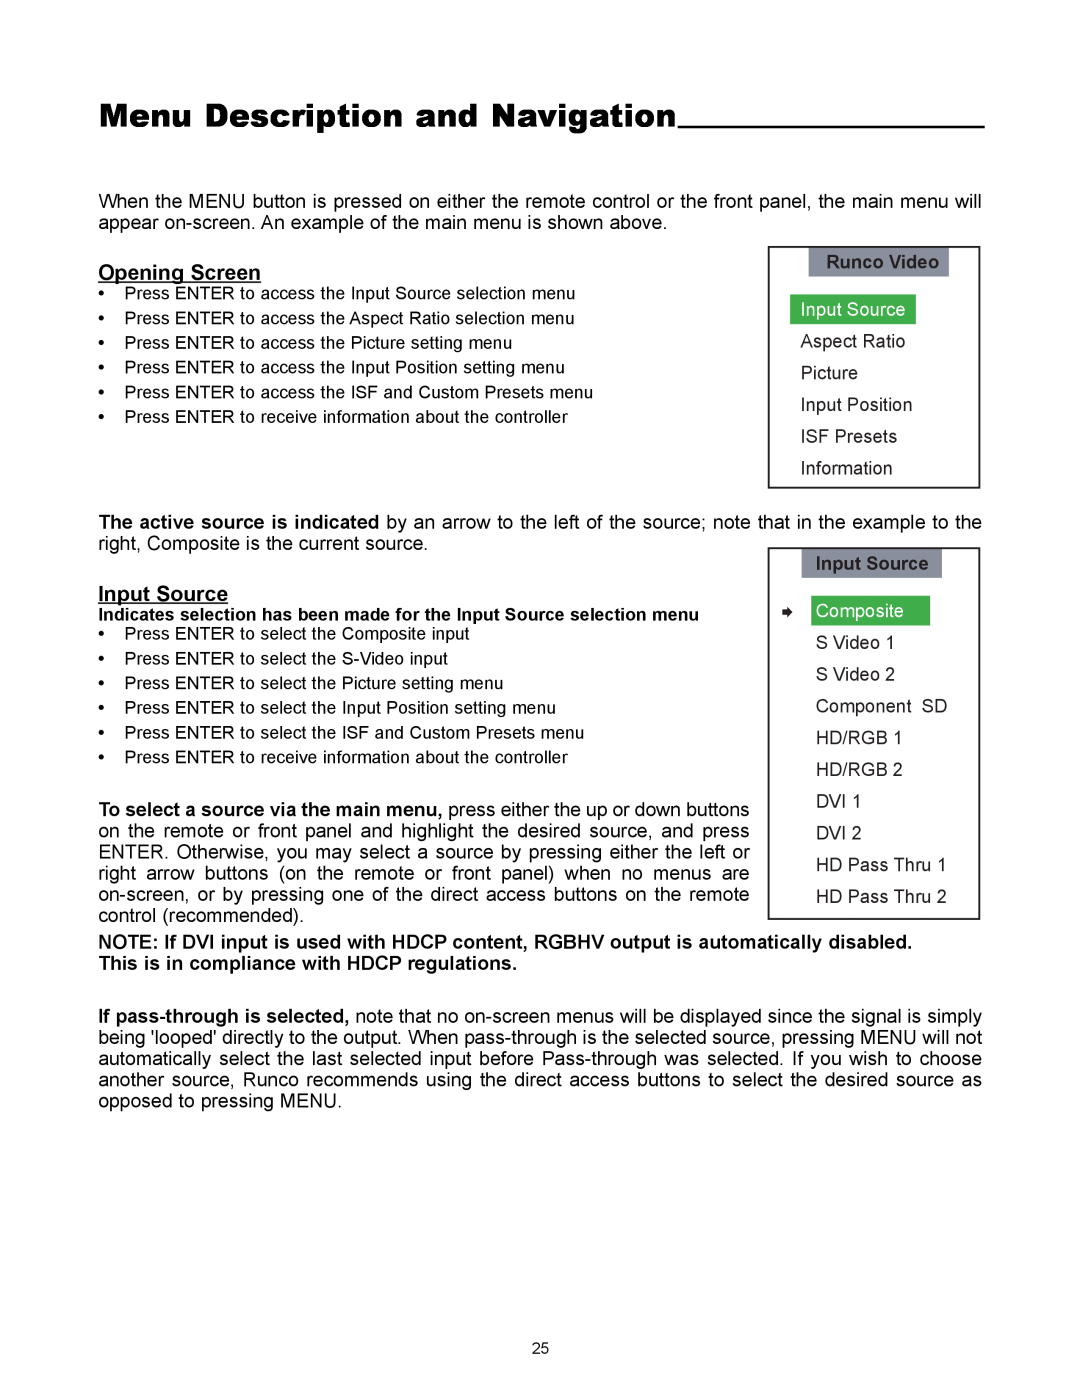 Runco VX-4000ci manual Menu Description and Navigation, Opening Screen, Input Source 